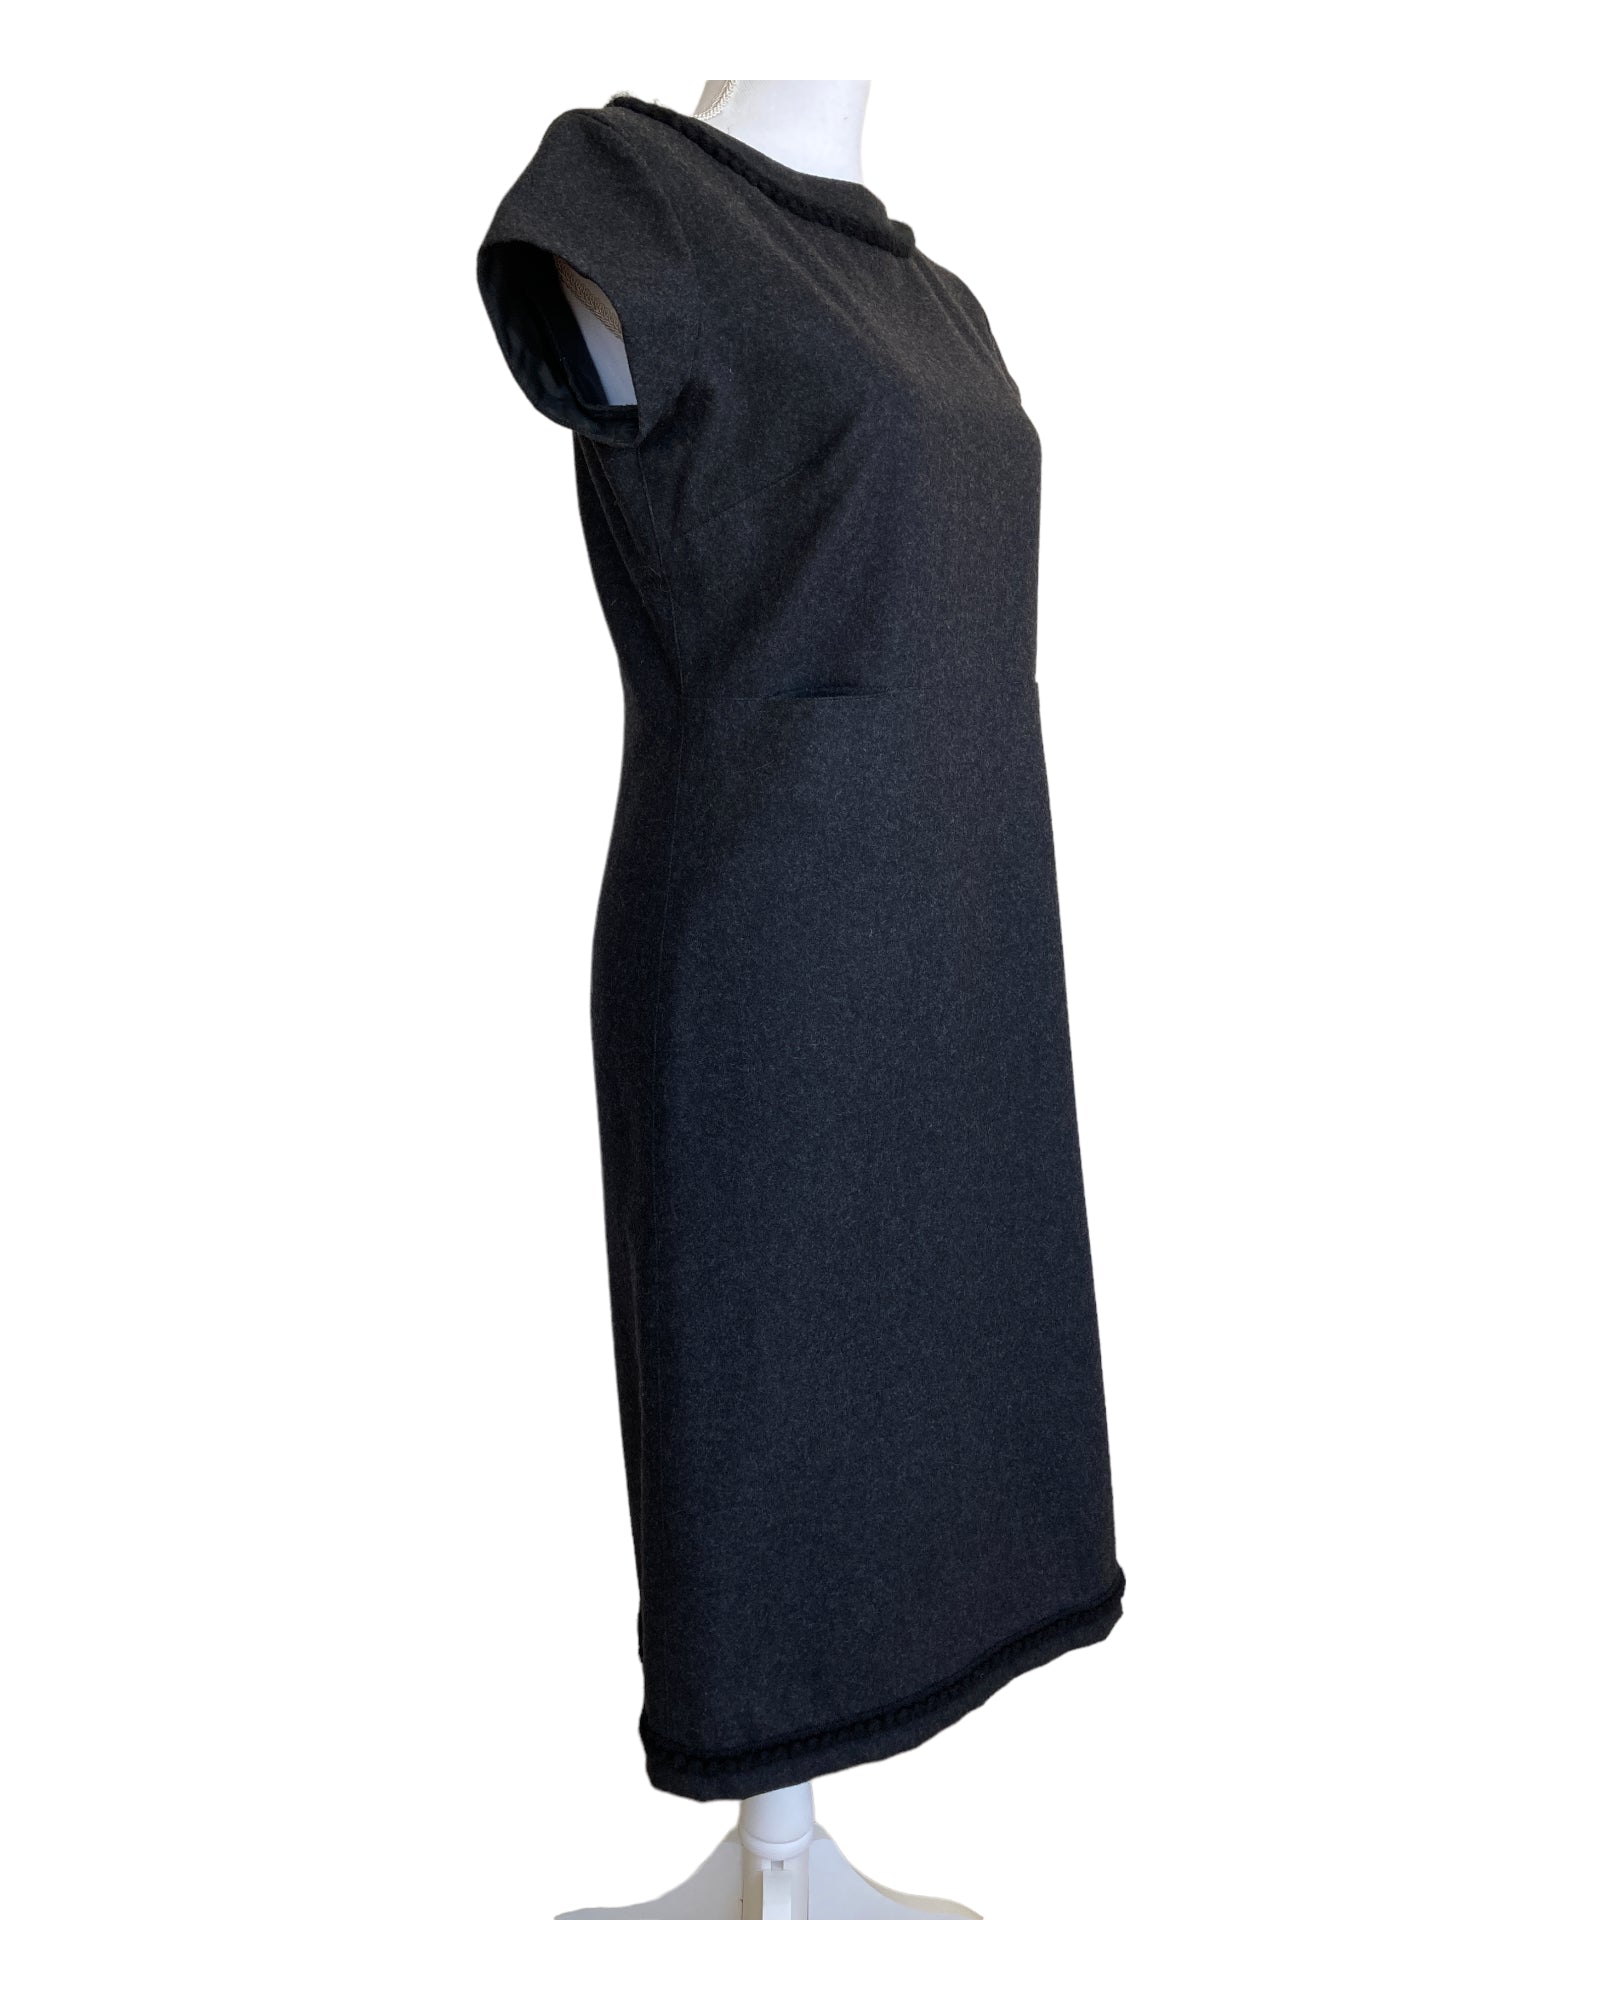 Evan Picone Charcoal Wool Cap Sleeve with Rope Trim Dress, 4